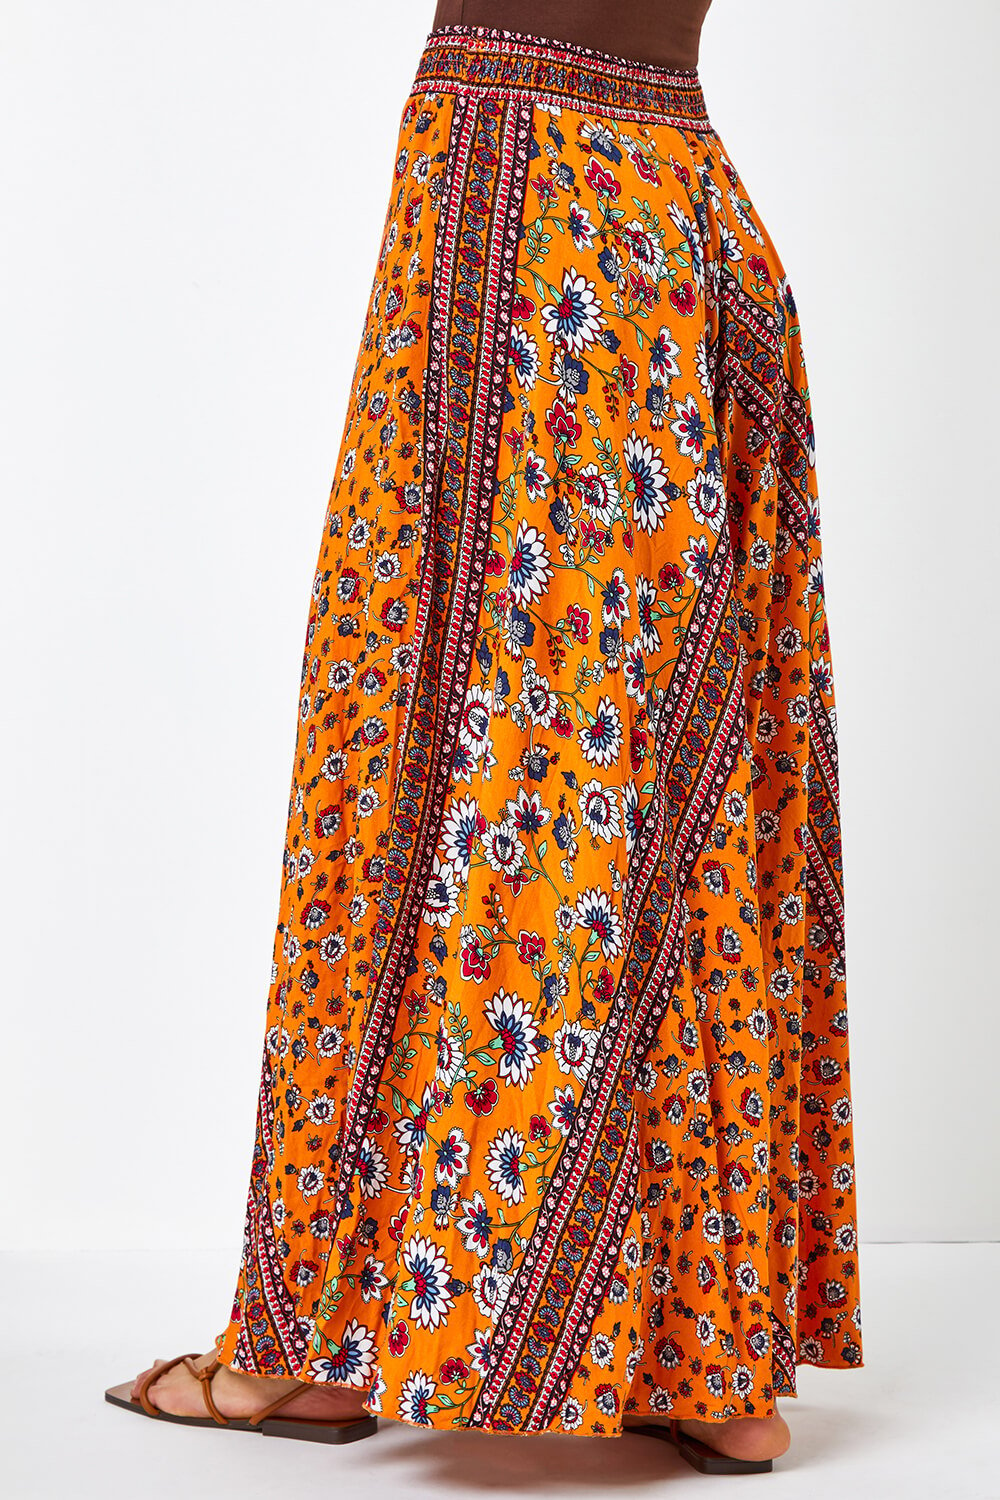 ORANGE Boho Floral Print Maxi Skirt, Image 3 of 5